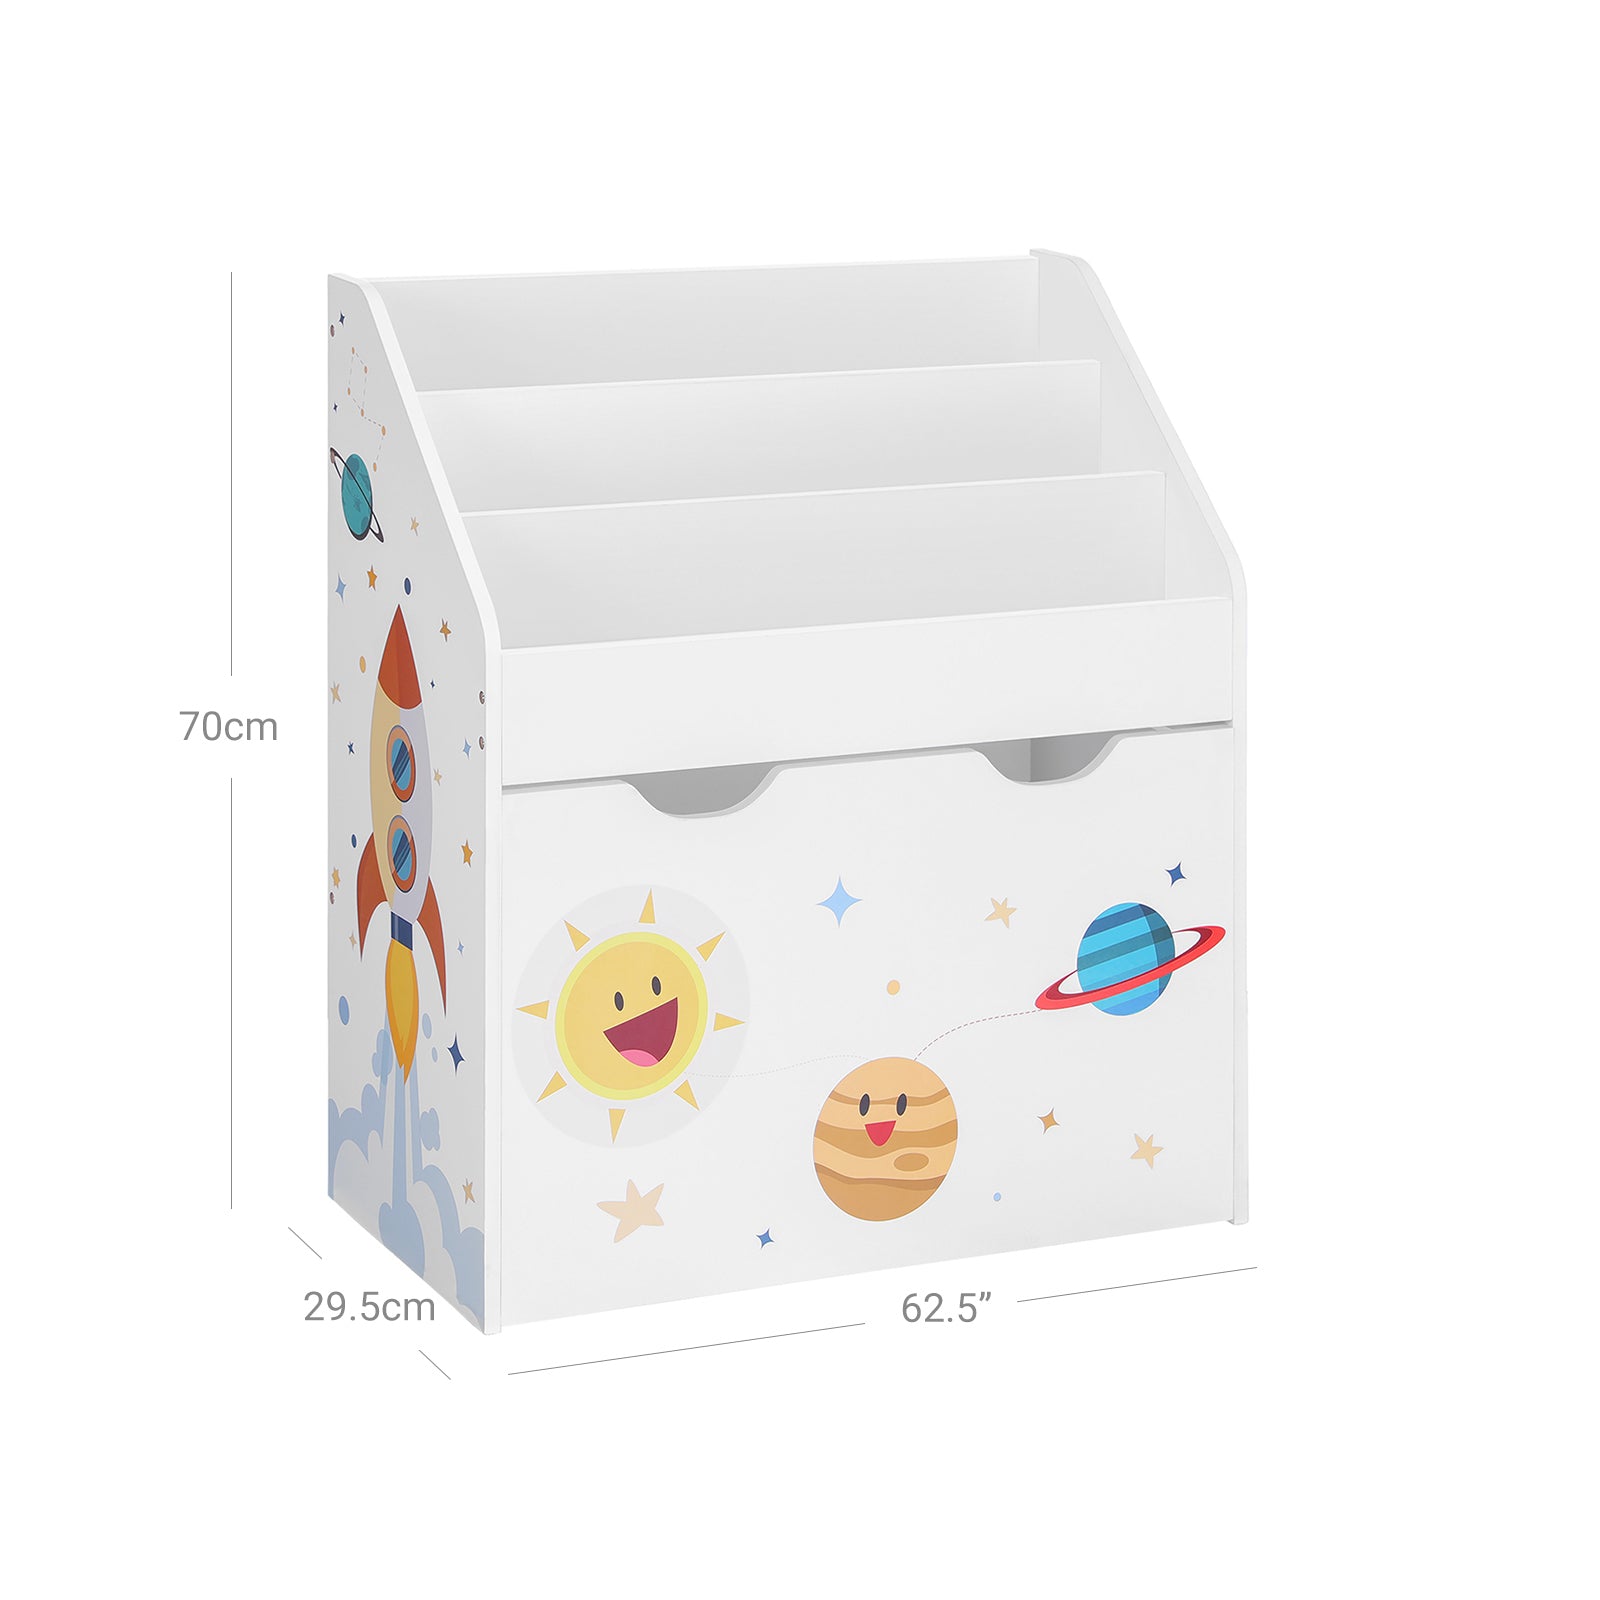 Toy Organiser, Children’s Bookshelf with 3 Shelves, Removable Storage Box with Wheels, Multipurpose, SONGMICS, 6